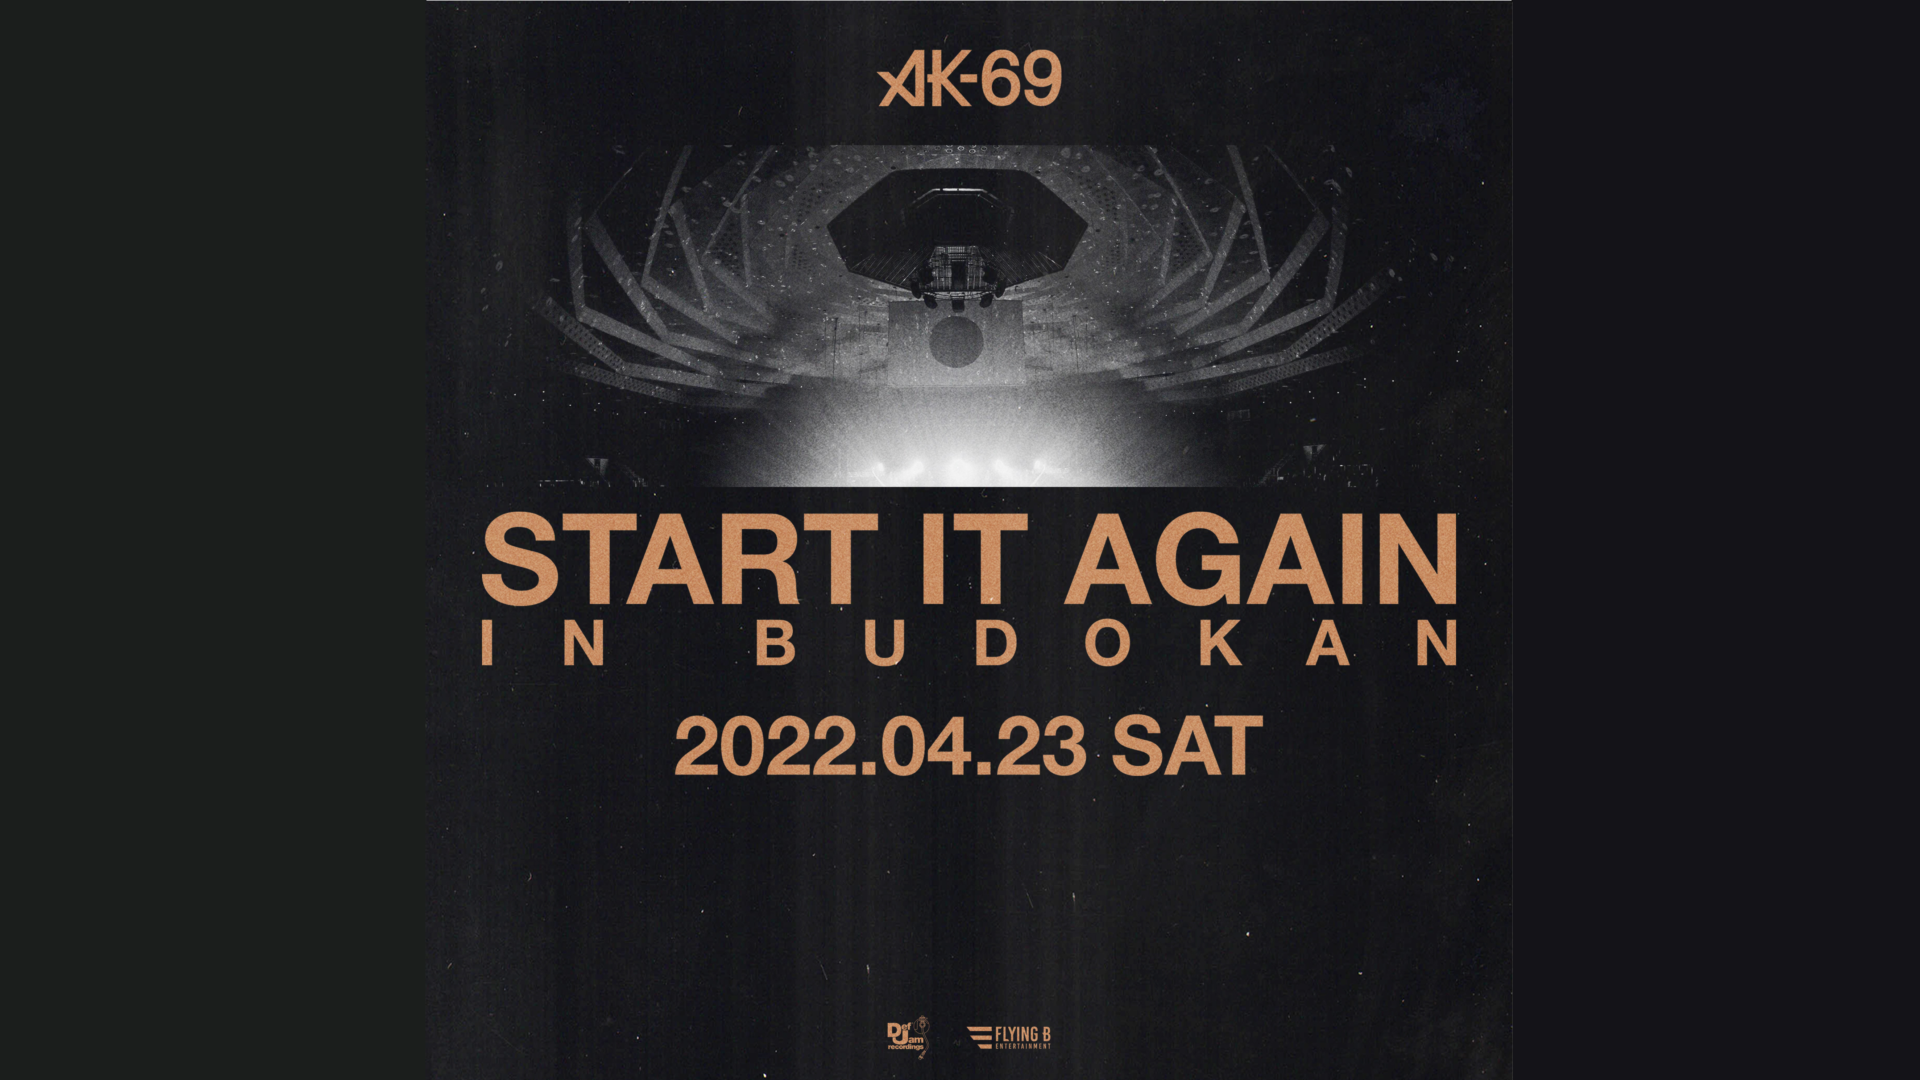 AK-69】START IT AGAIN in BUDOKAN 開催決定!! - 360concept